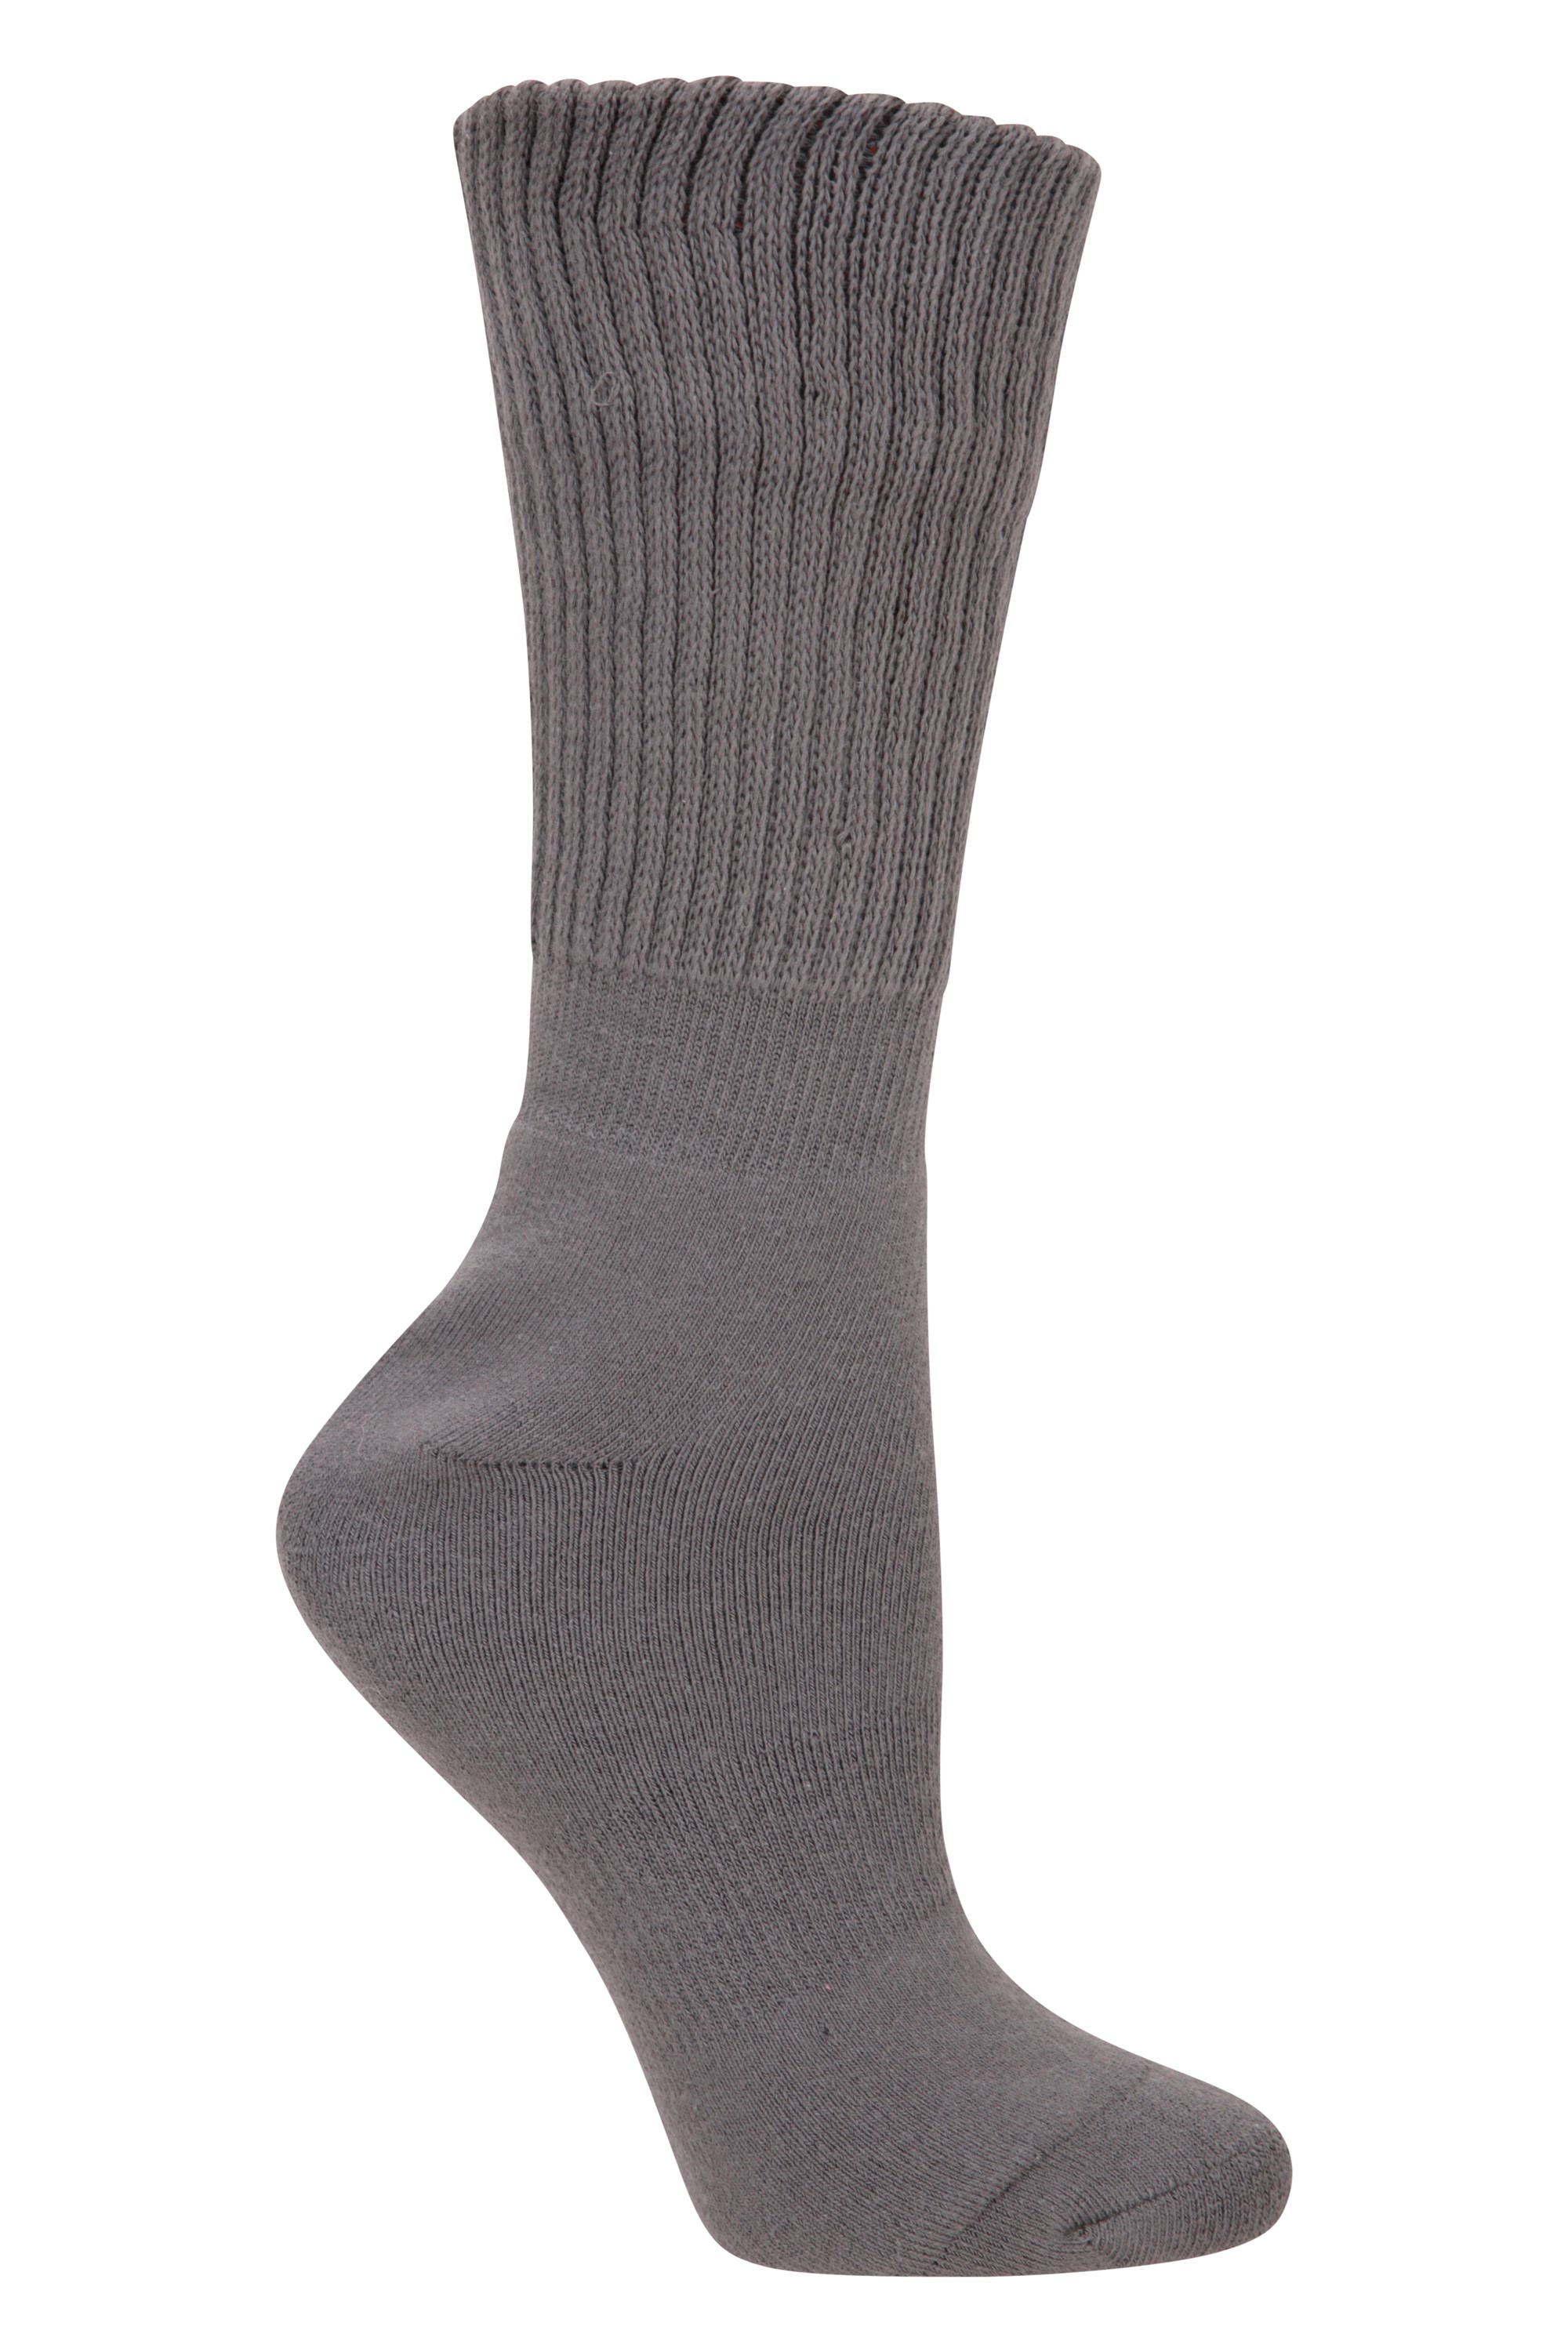 Double Layer Anti-Chafe Walking Socks - Grey